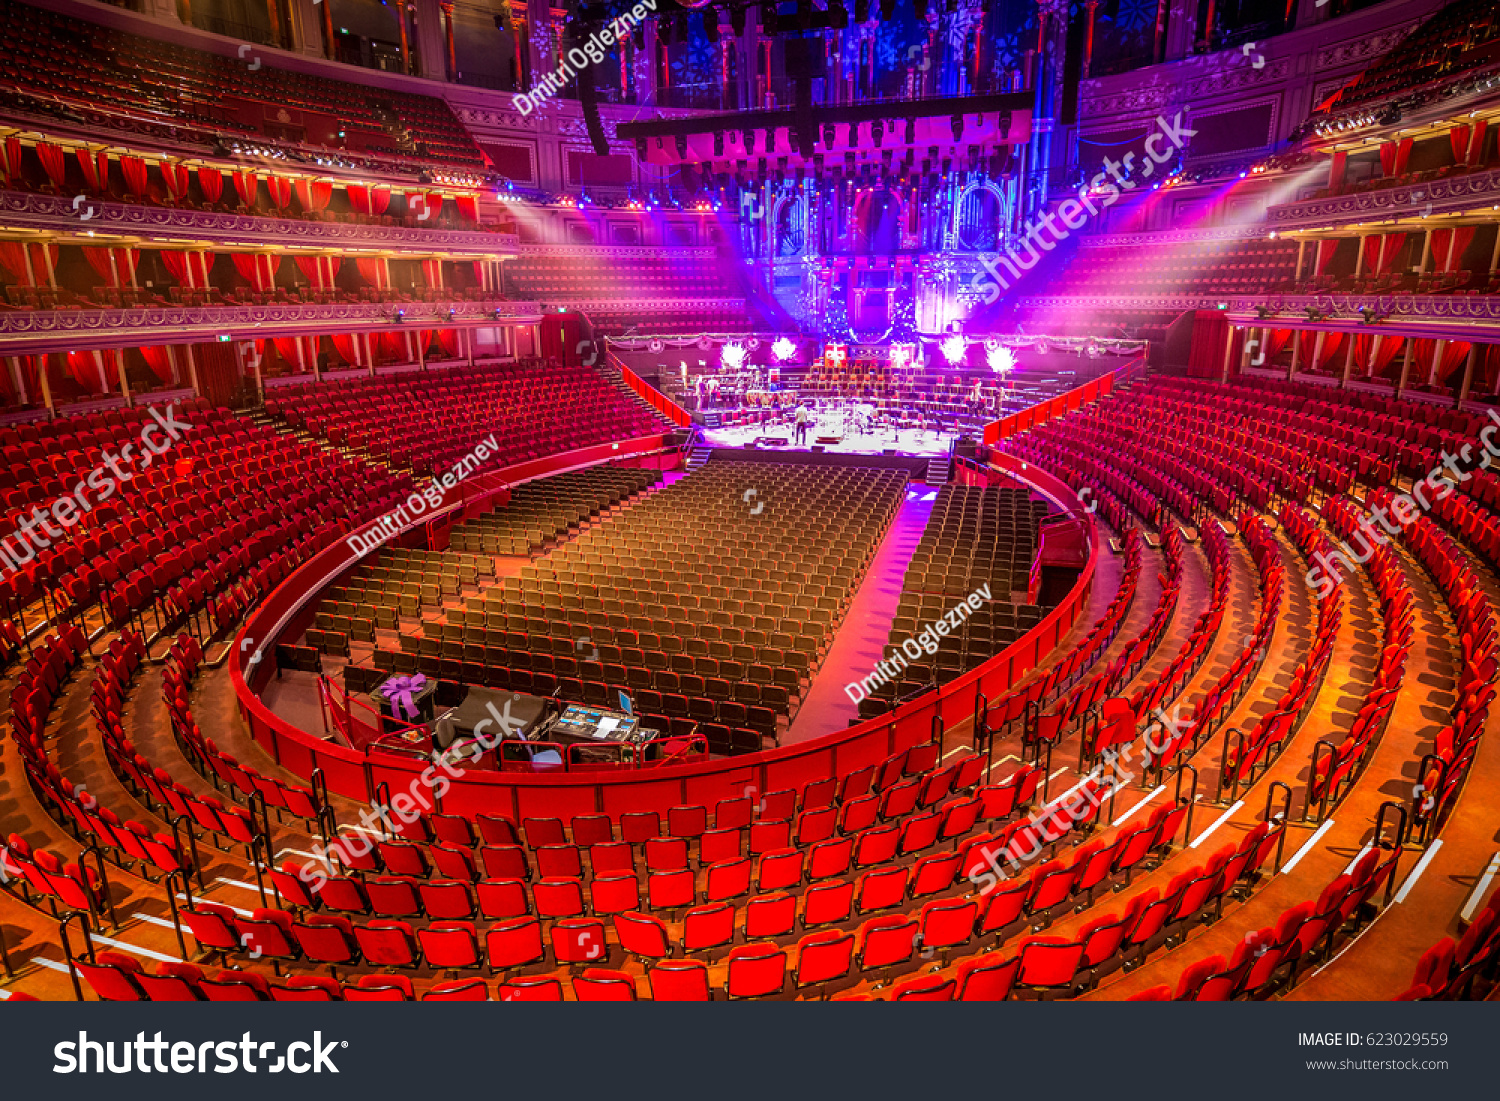 Amphitheater and scene at Royal Albert Hall. London, Great Britain. #623029559